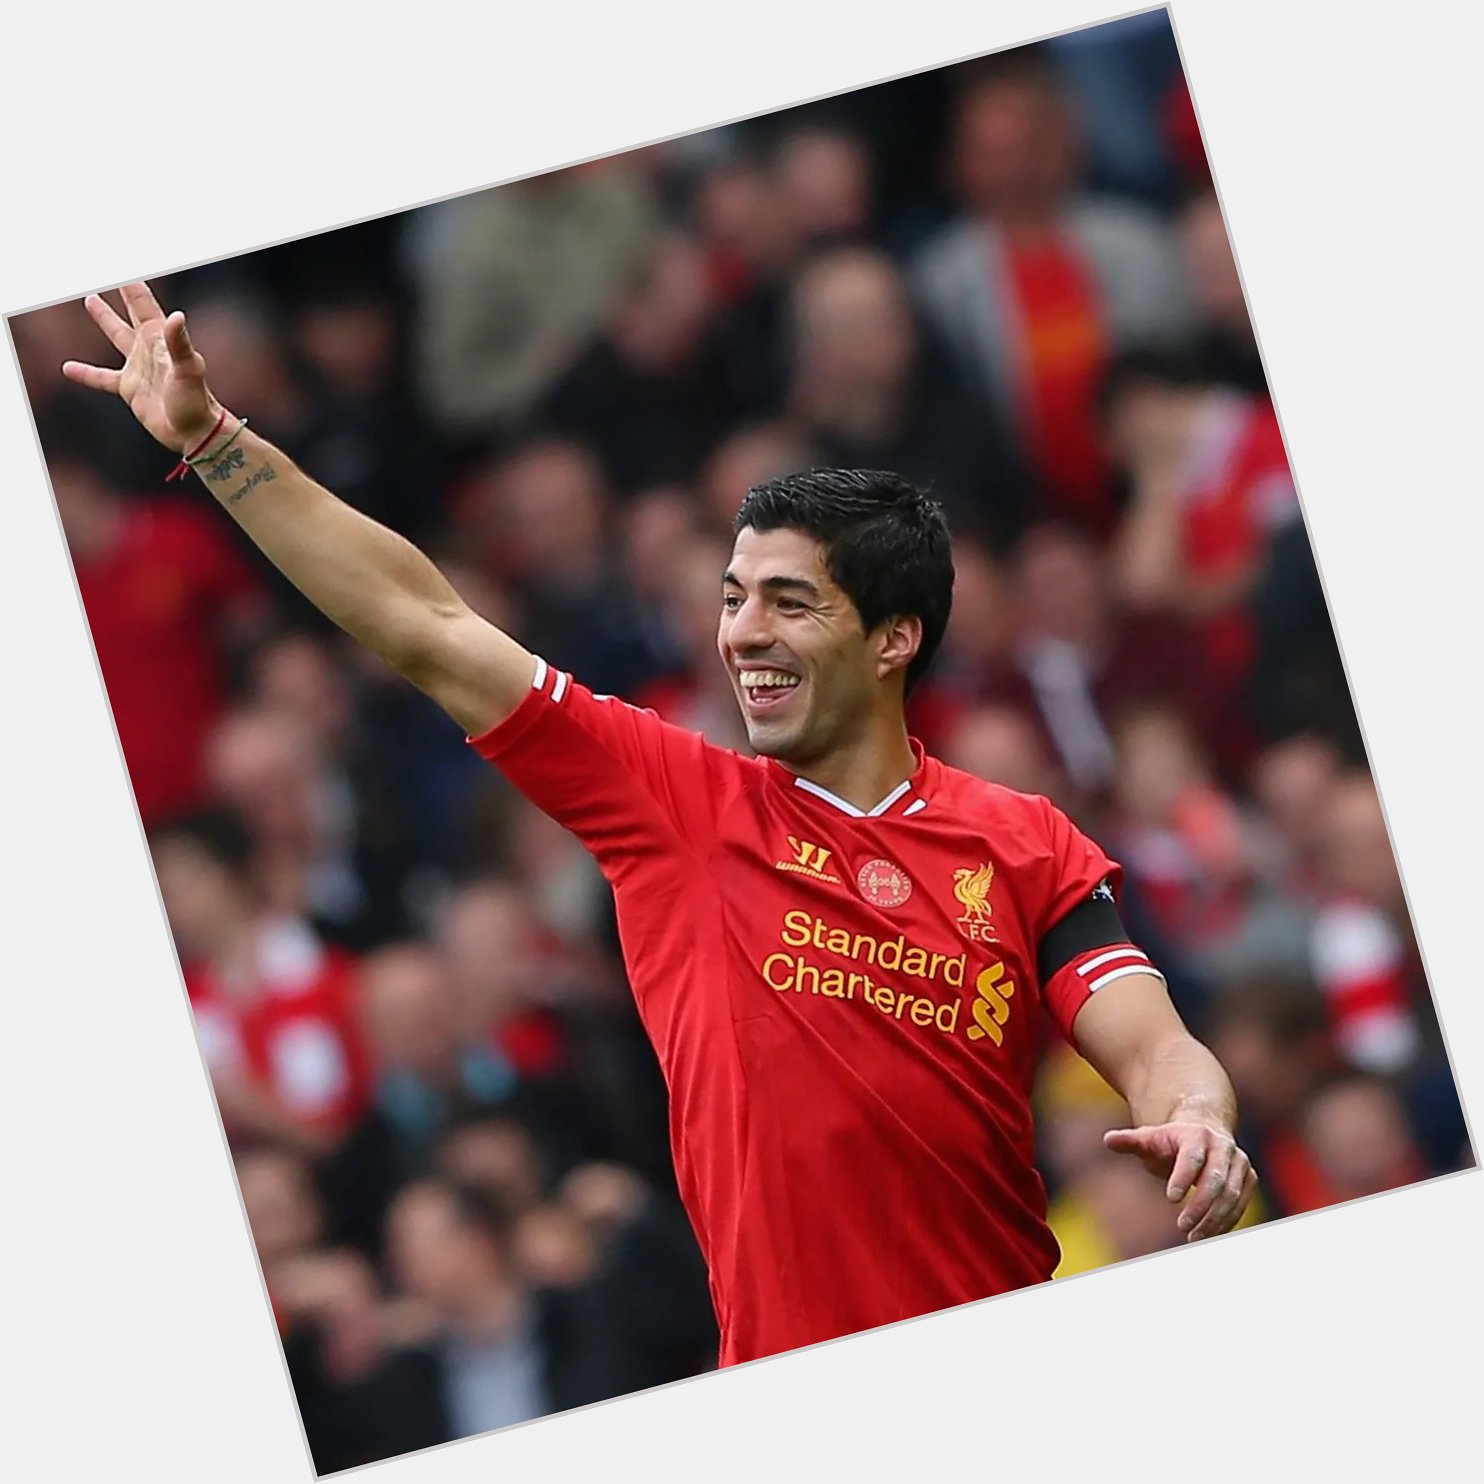 Happy Birthday El Pistolero  Your favorite Luis Suarez memory in a Liverpool shirt Reds? 